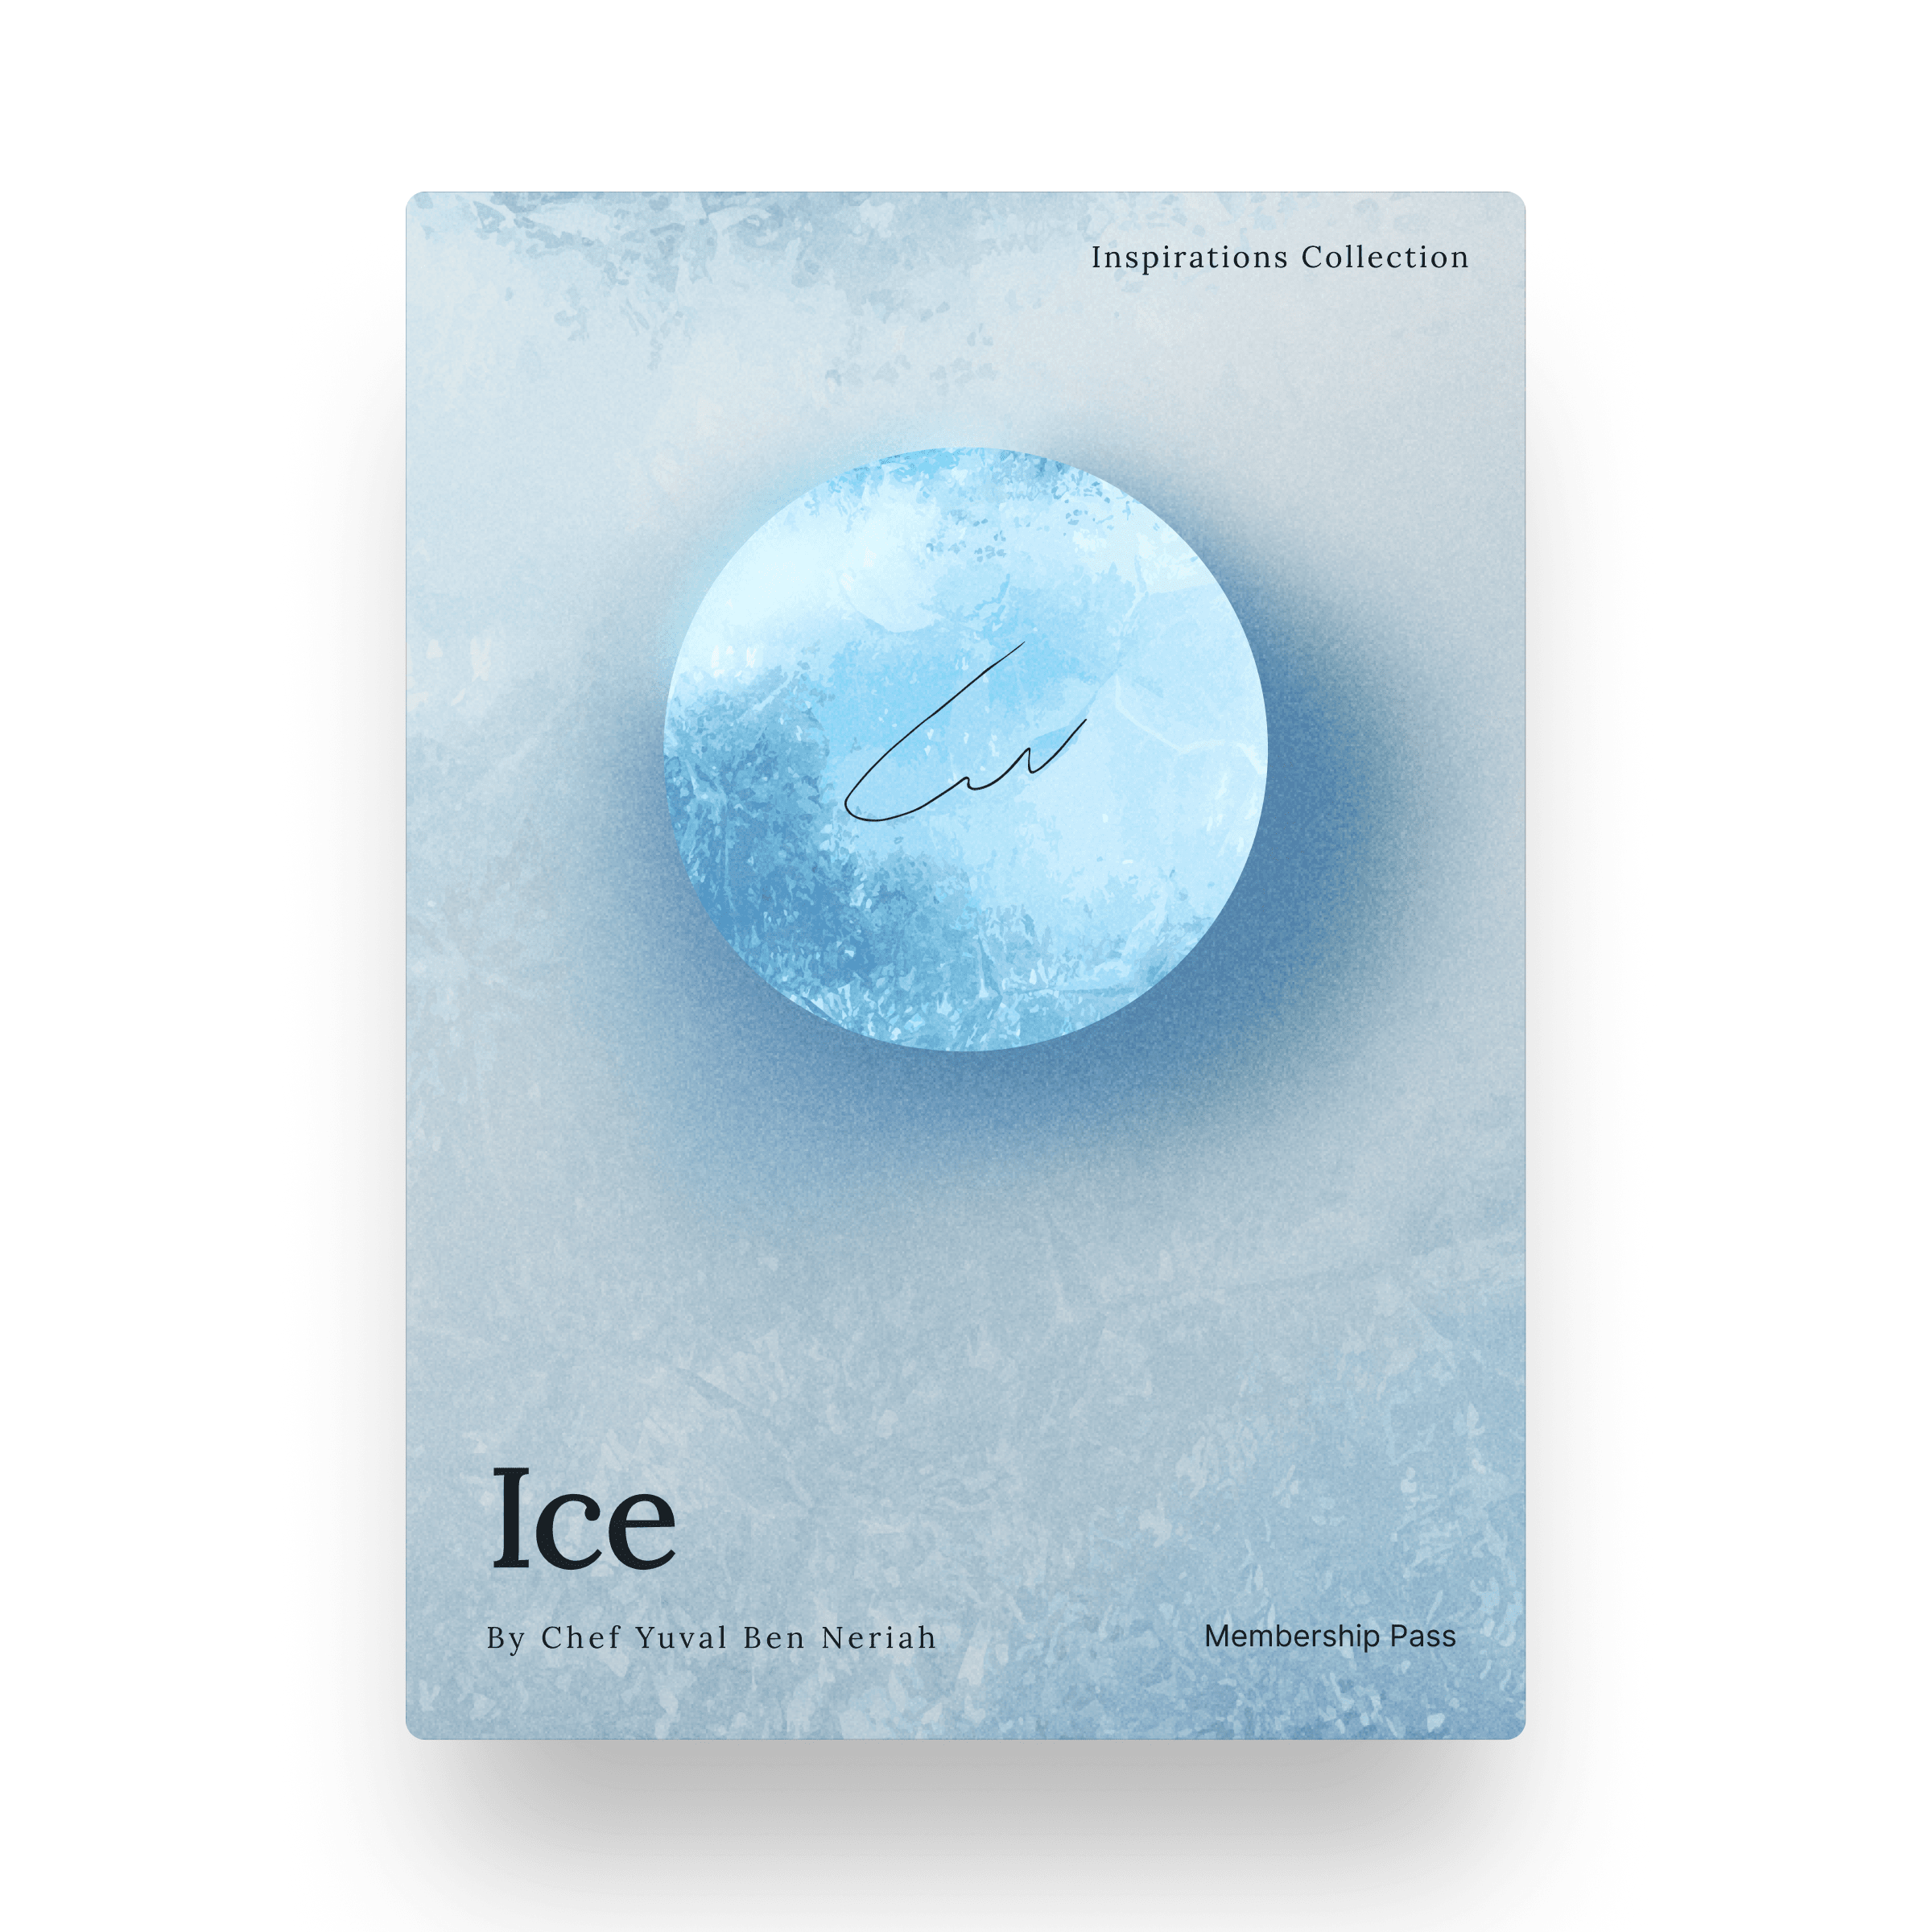 Ice by Chef Yuval Ben Neriah